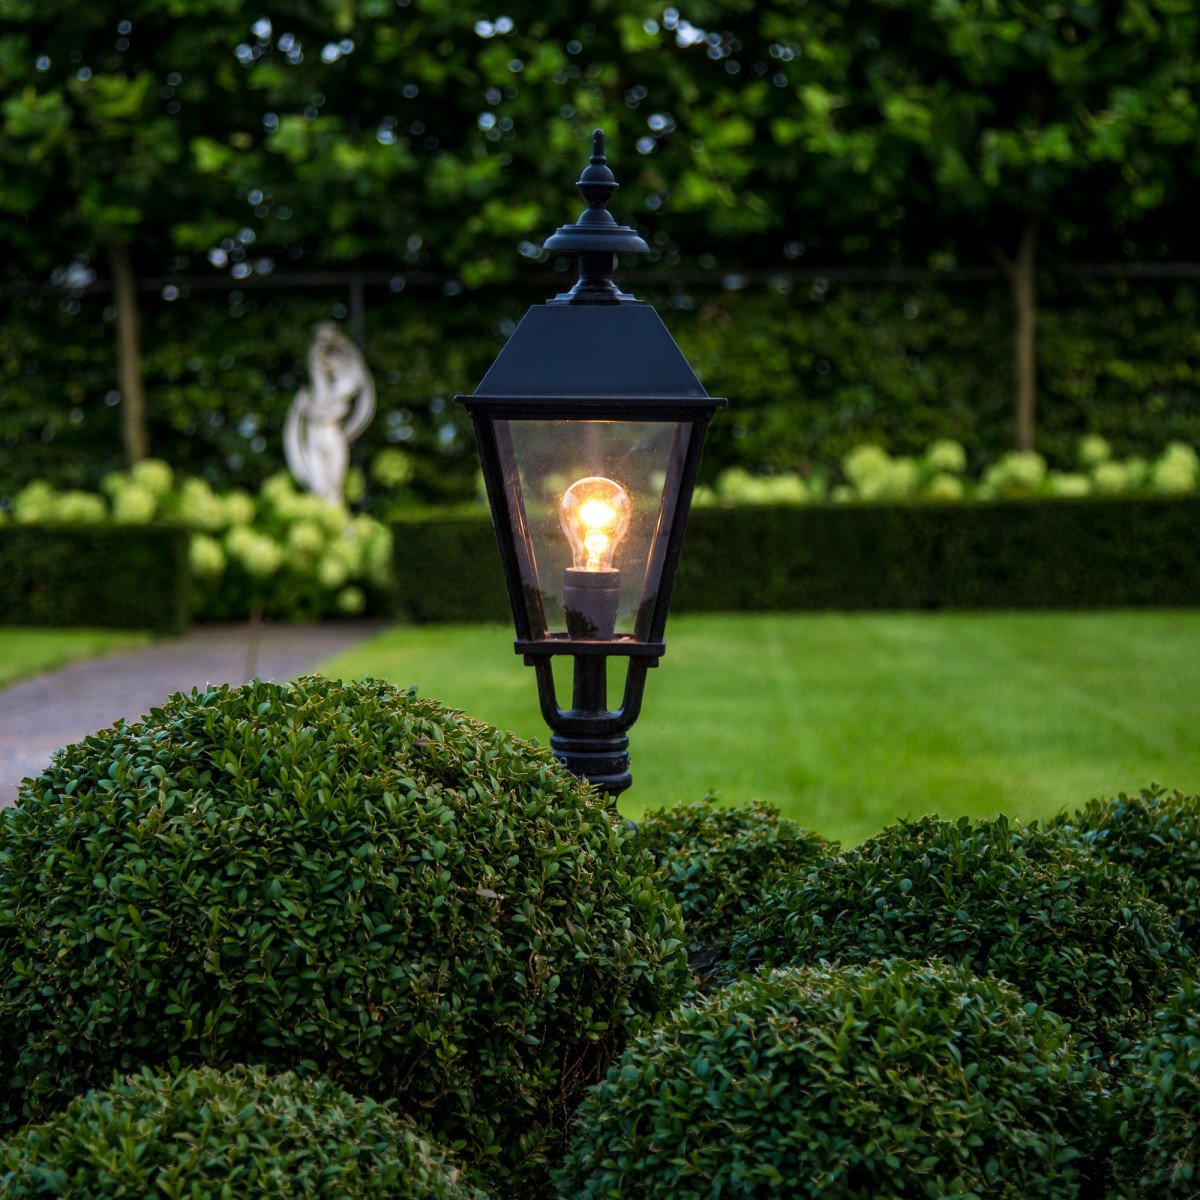 Lampe de jardin sur pied Bradford de KS Lighting avec lanterne carrée